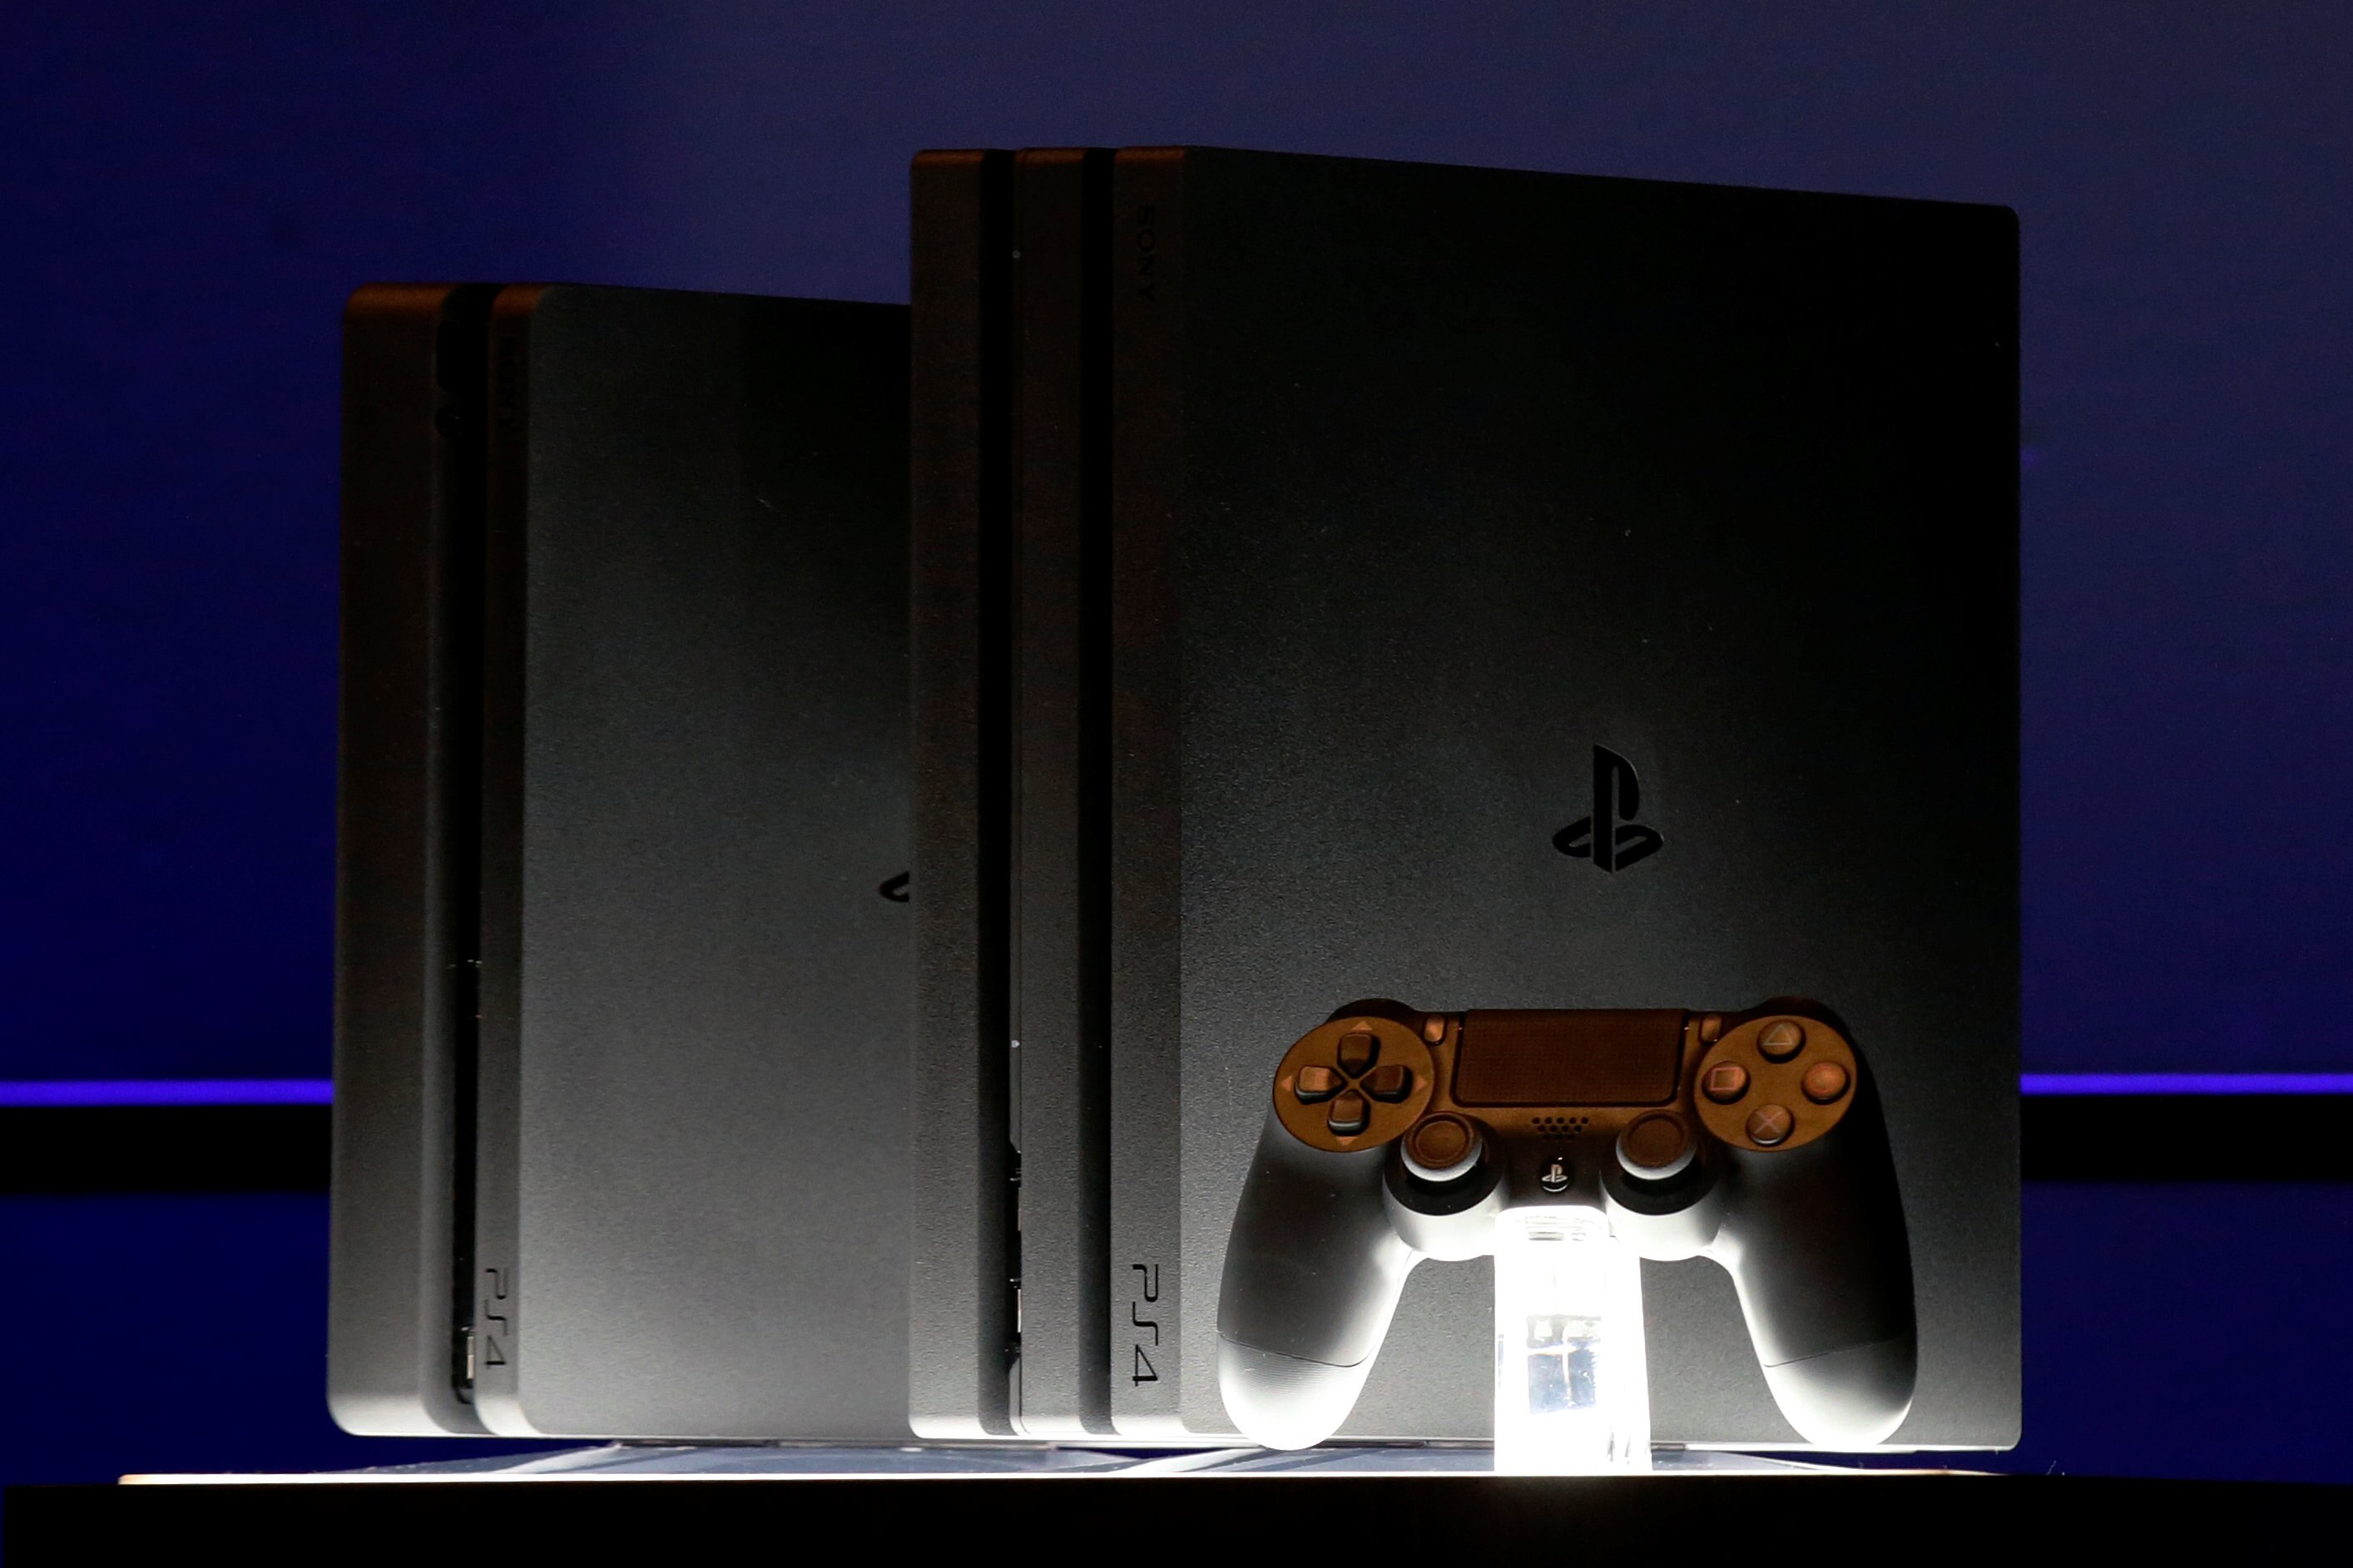 Entenda tudo o que a Sony revelou sobre os novos PlayStation 4